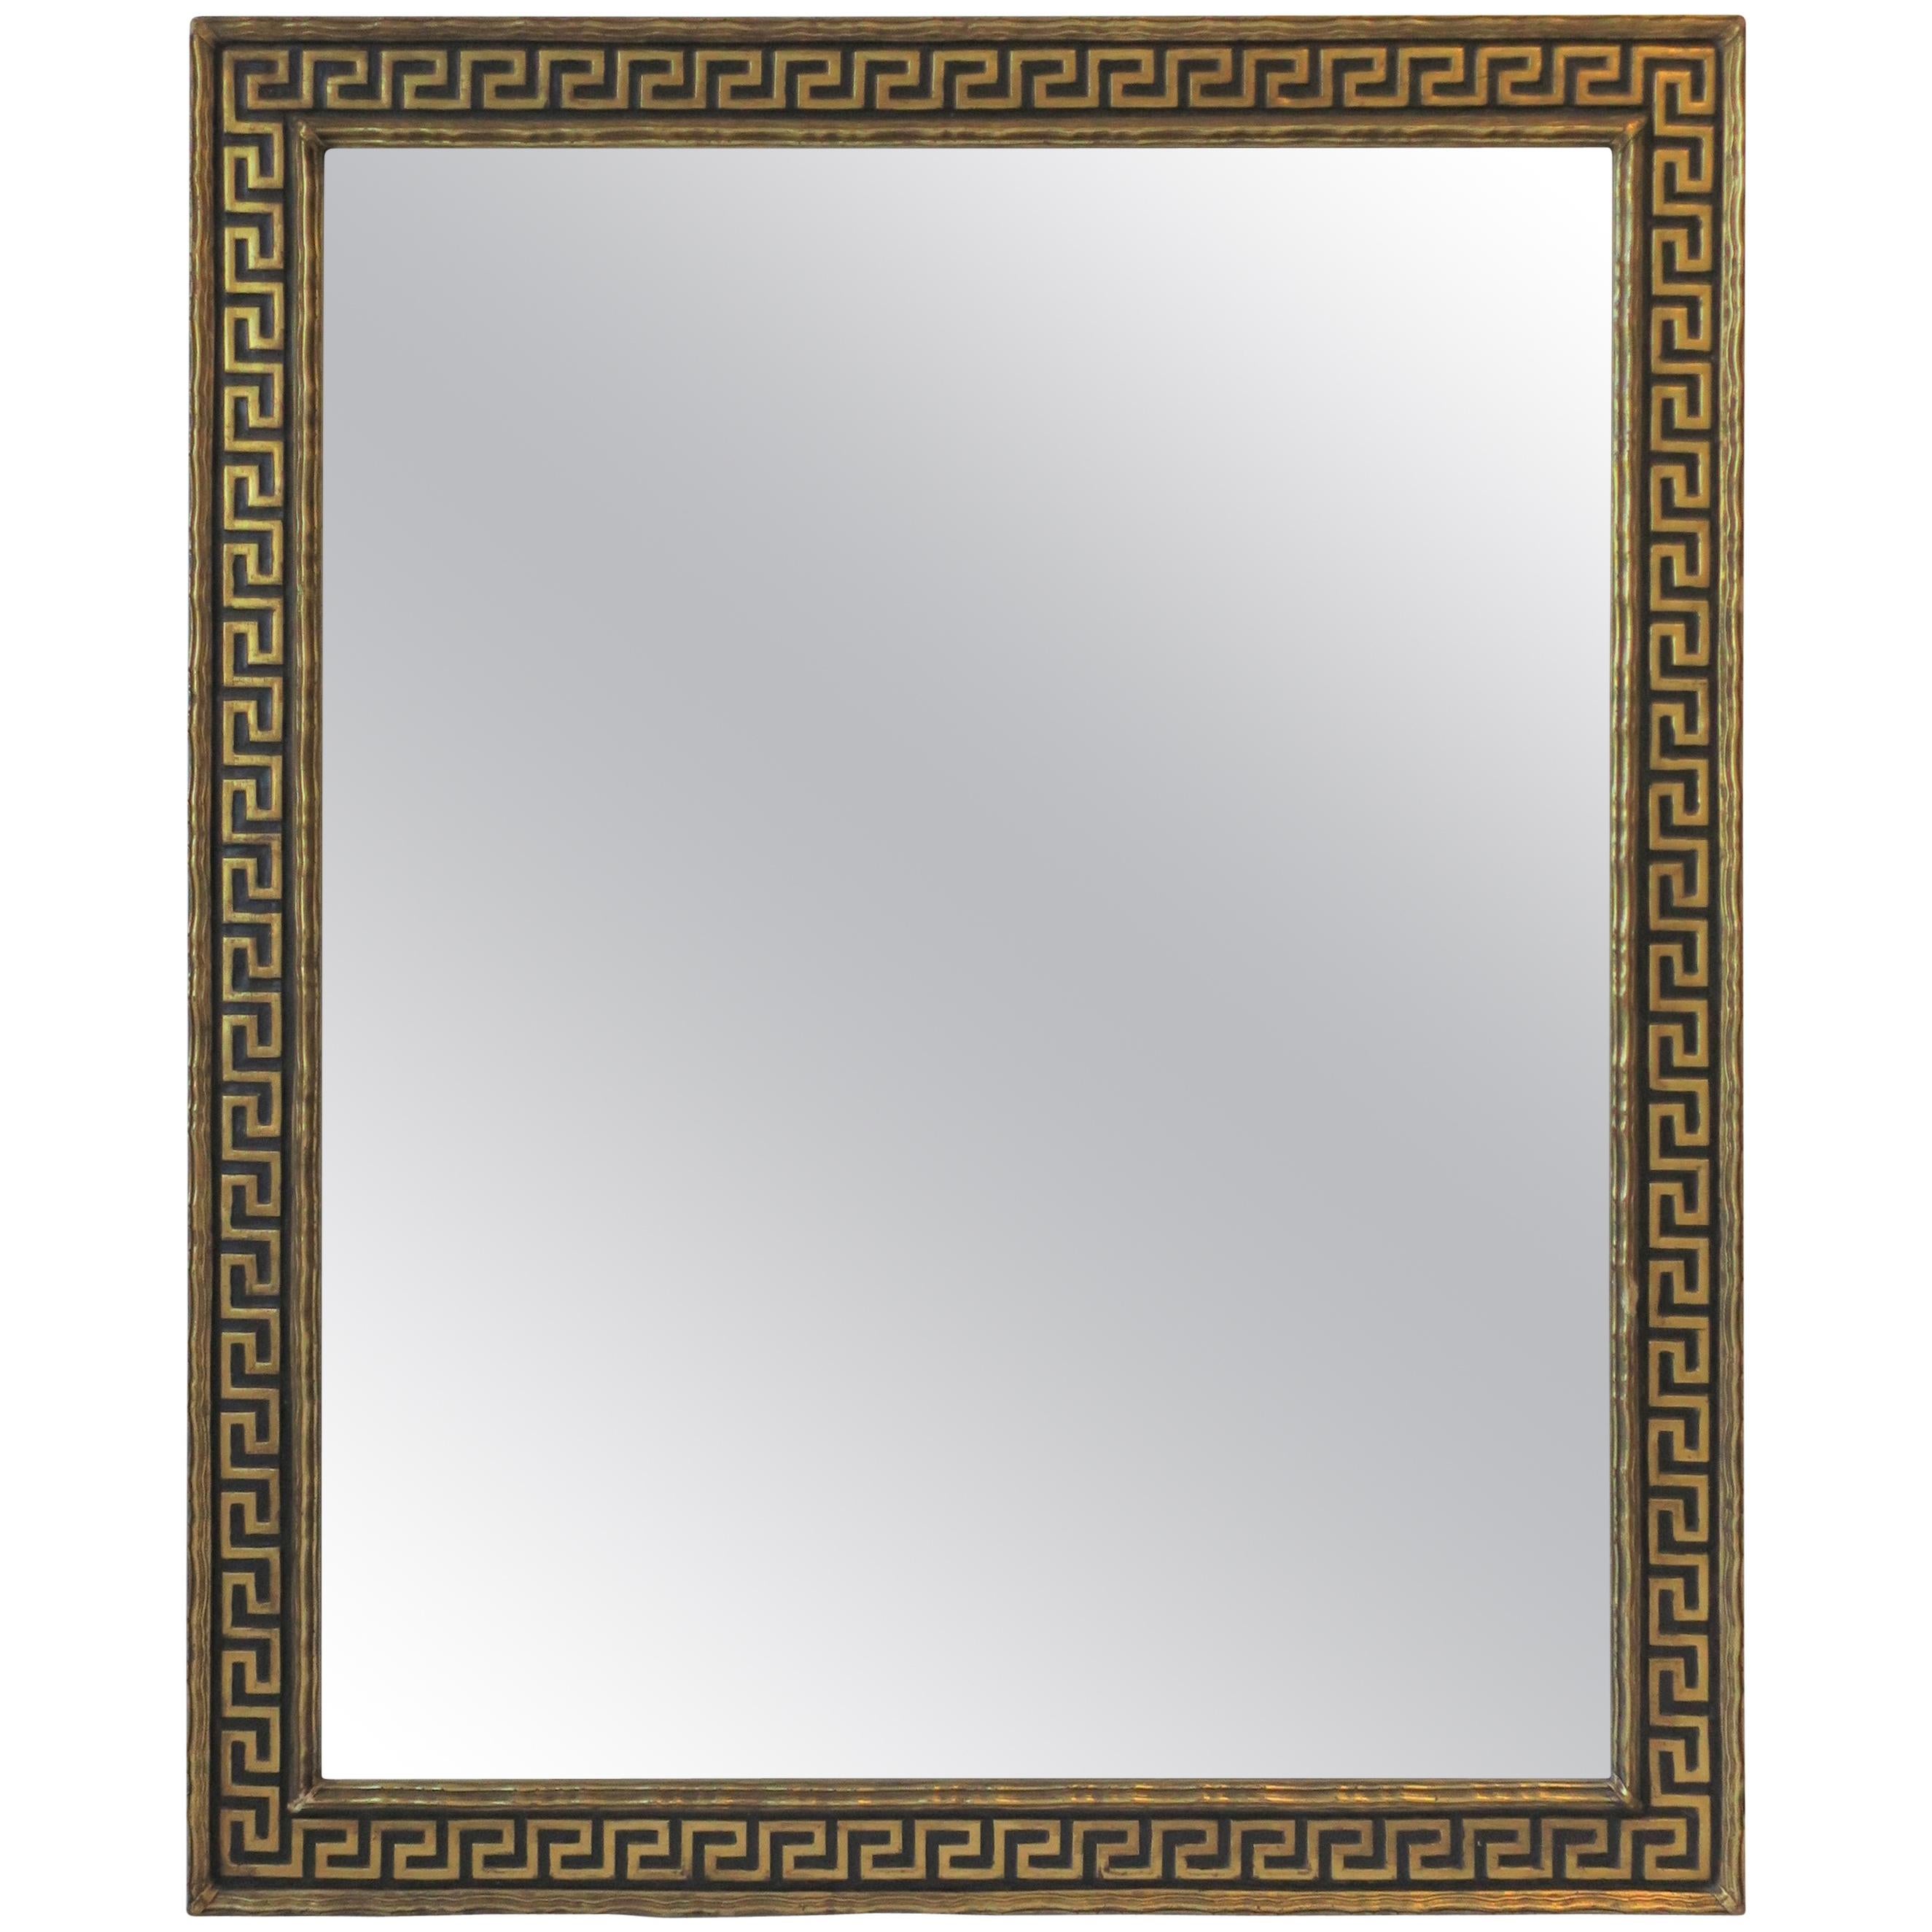 Italian Black and Gold Giltwood Mirror with Greek-Key Design